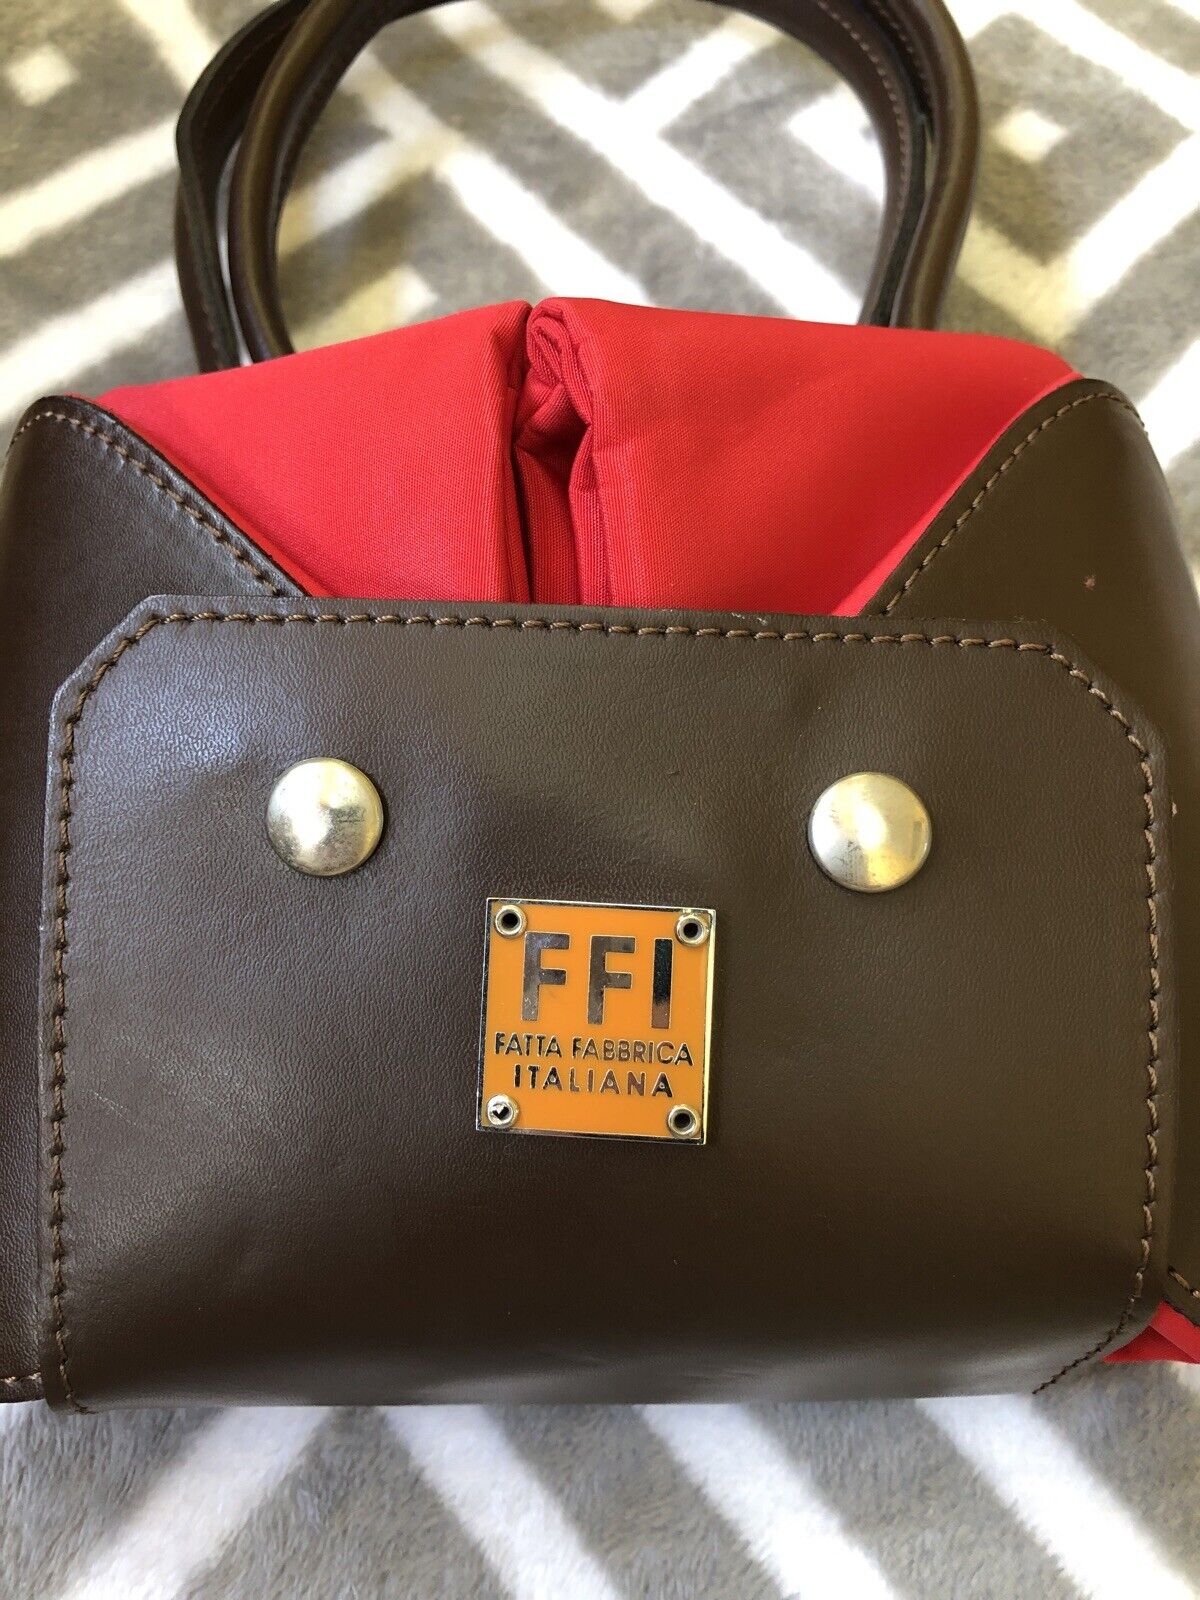 FFI FATTA FABRICA ITALIANA Nylon Red Large Handbag Fold Tote Made in Italy  | eBay